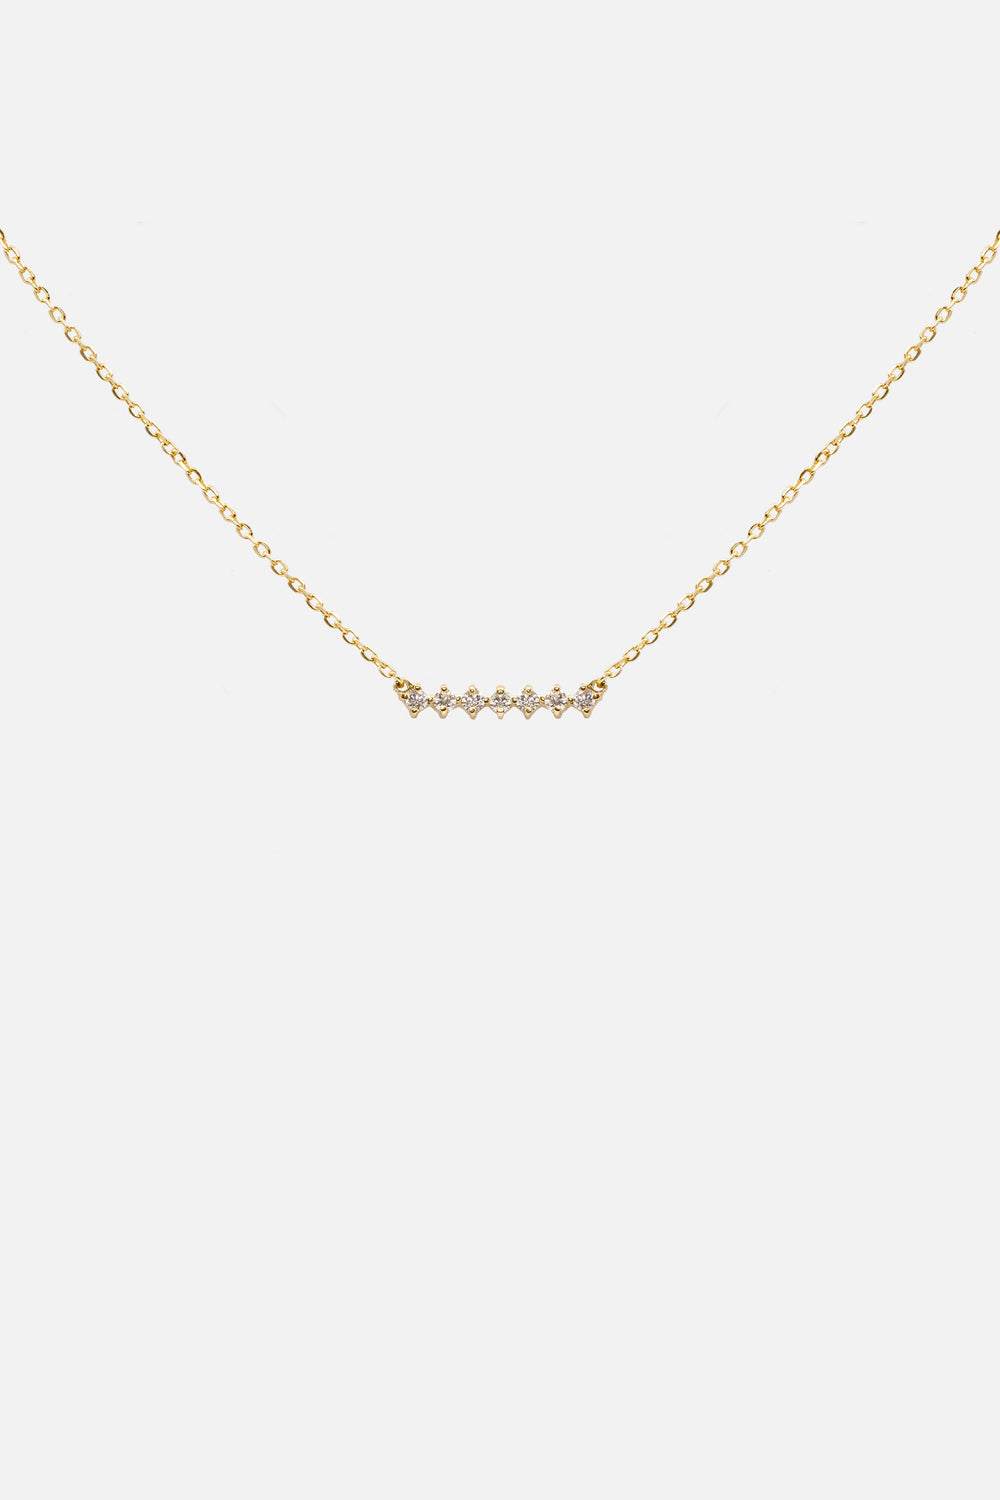 Buttercup Diamond Necklace | 18K Yellow Gold